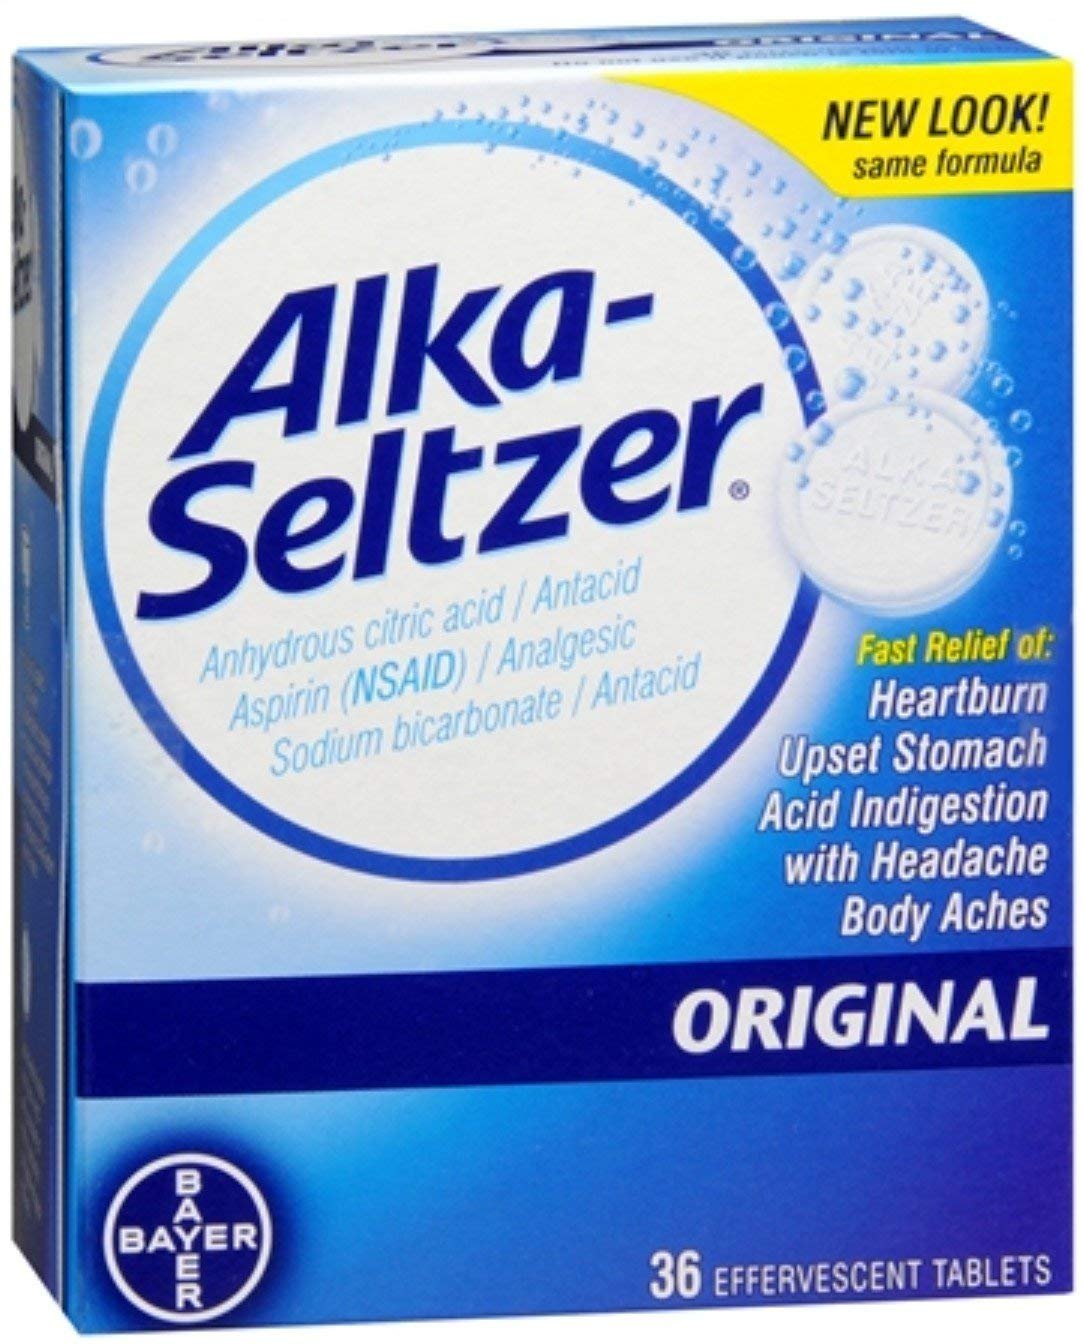 Alka-Seltzer Antacid Aspirin Analgesic Effervescent Tablet, 36 Ct, 2 Pack - image 2 of 4